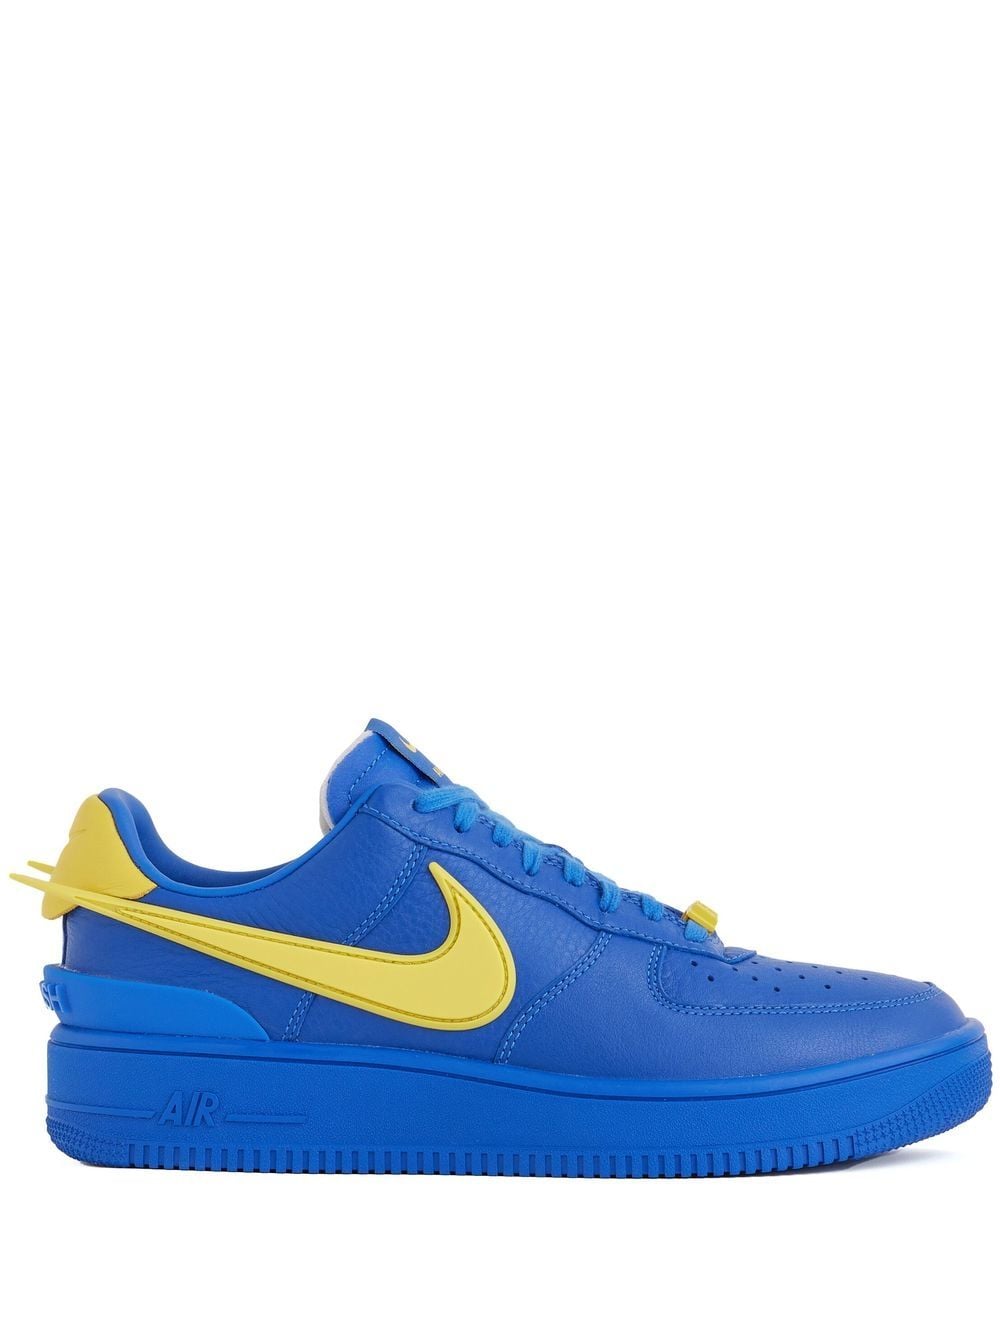 Nike X Ambush Air Force 1 Low Sp Sneakers In Blue | ModeSens